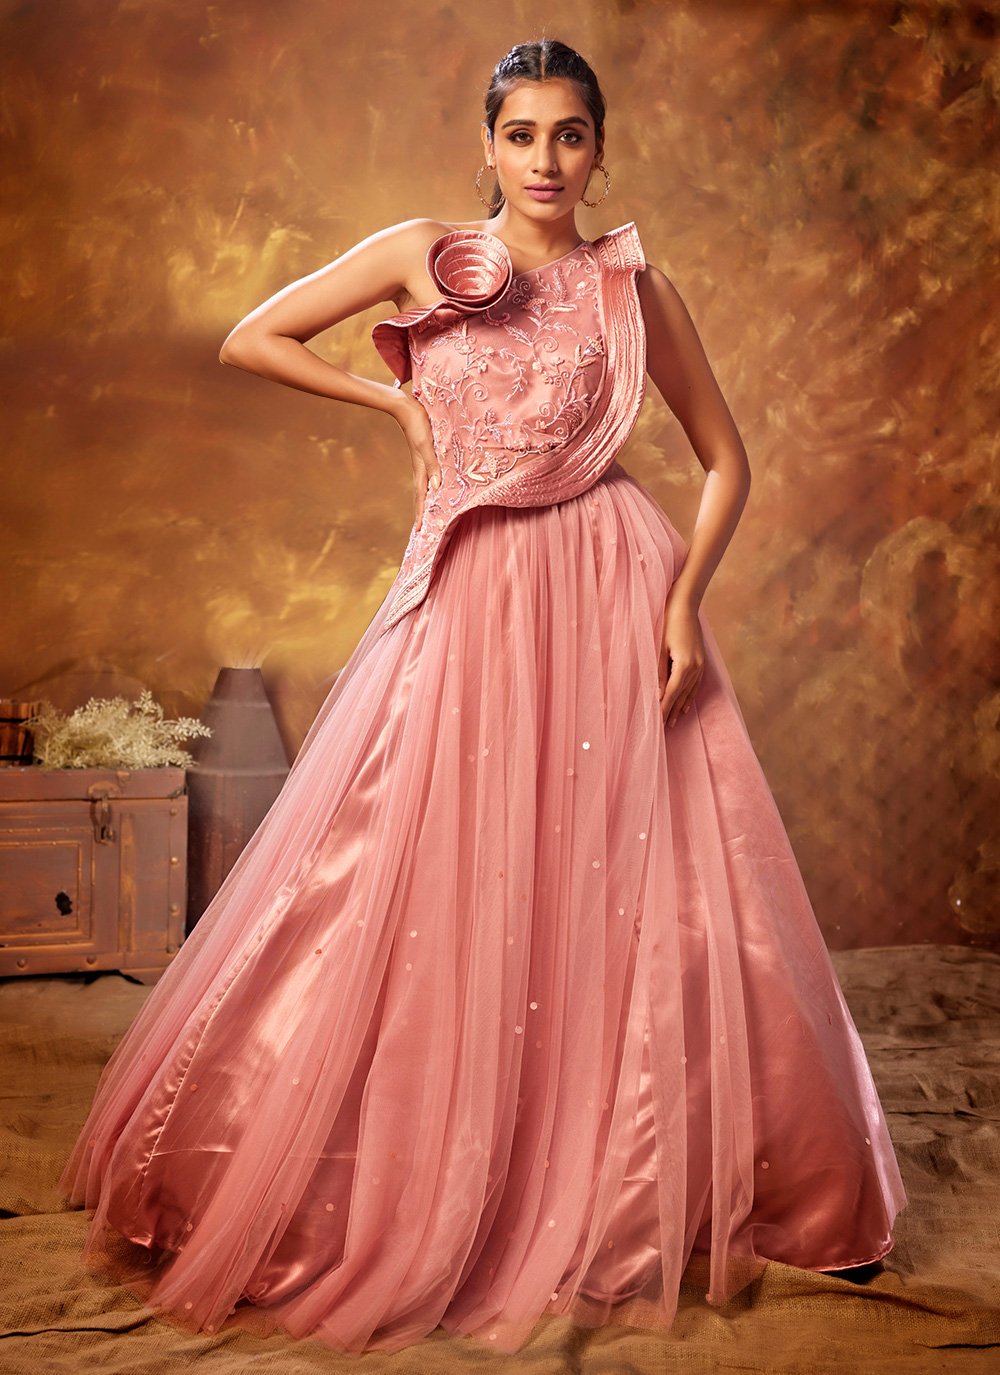 Gowns & Frocks Designs - Manish Malhotra Latest Fancy Dresses (3) -  StylesGap.com